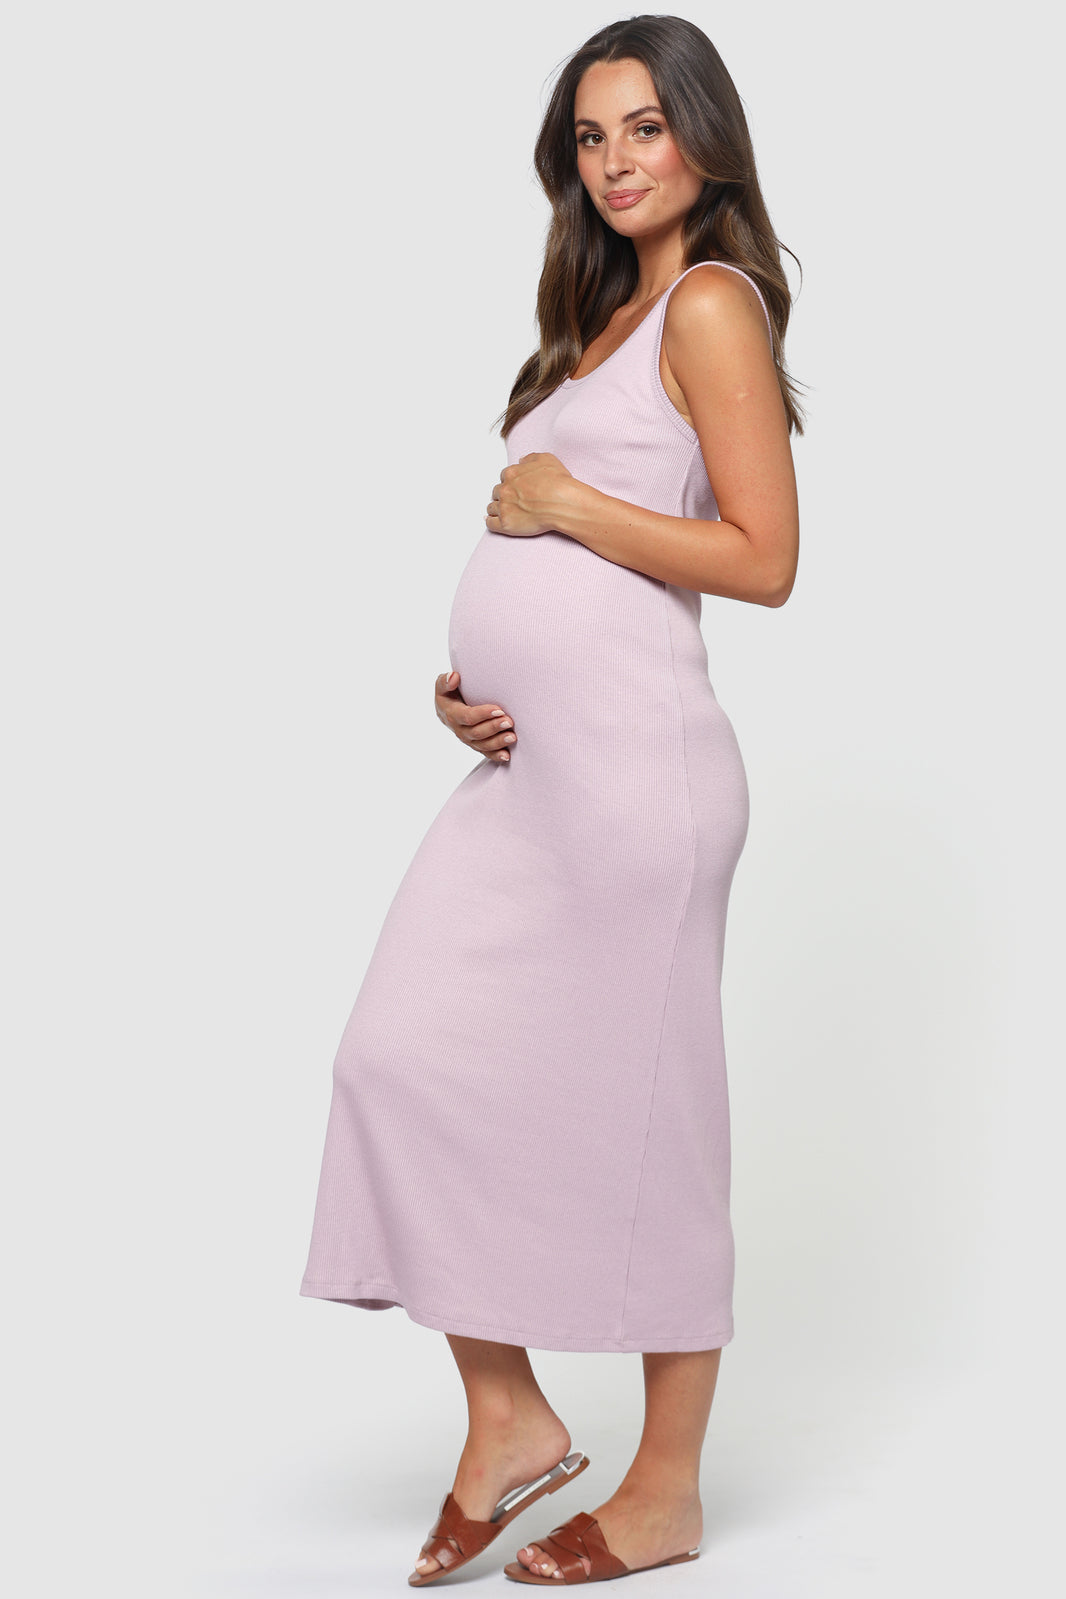 Organic Bamboo Maternity Tank Dress Dress from Bamboo Body maternity online store brisbane sydney perth australia